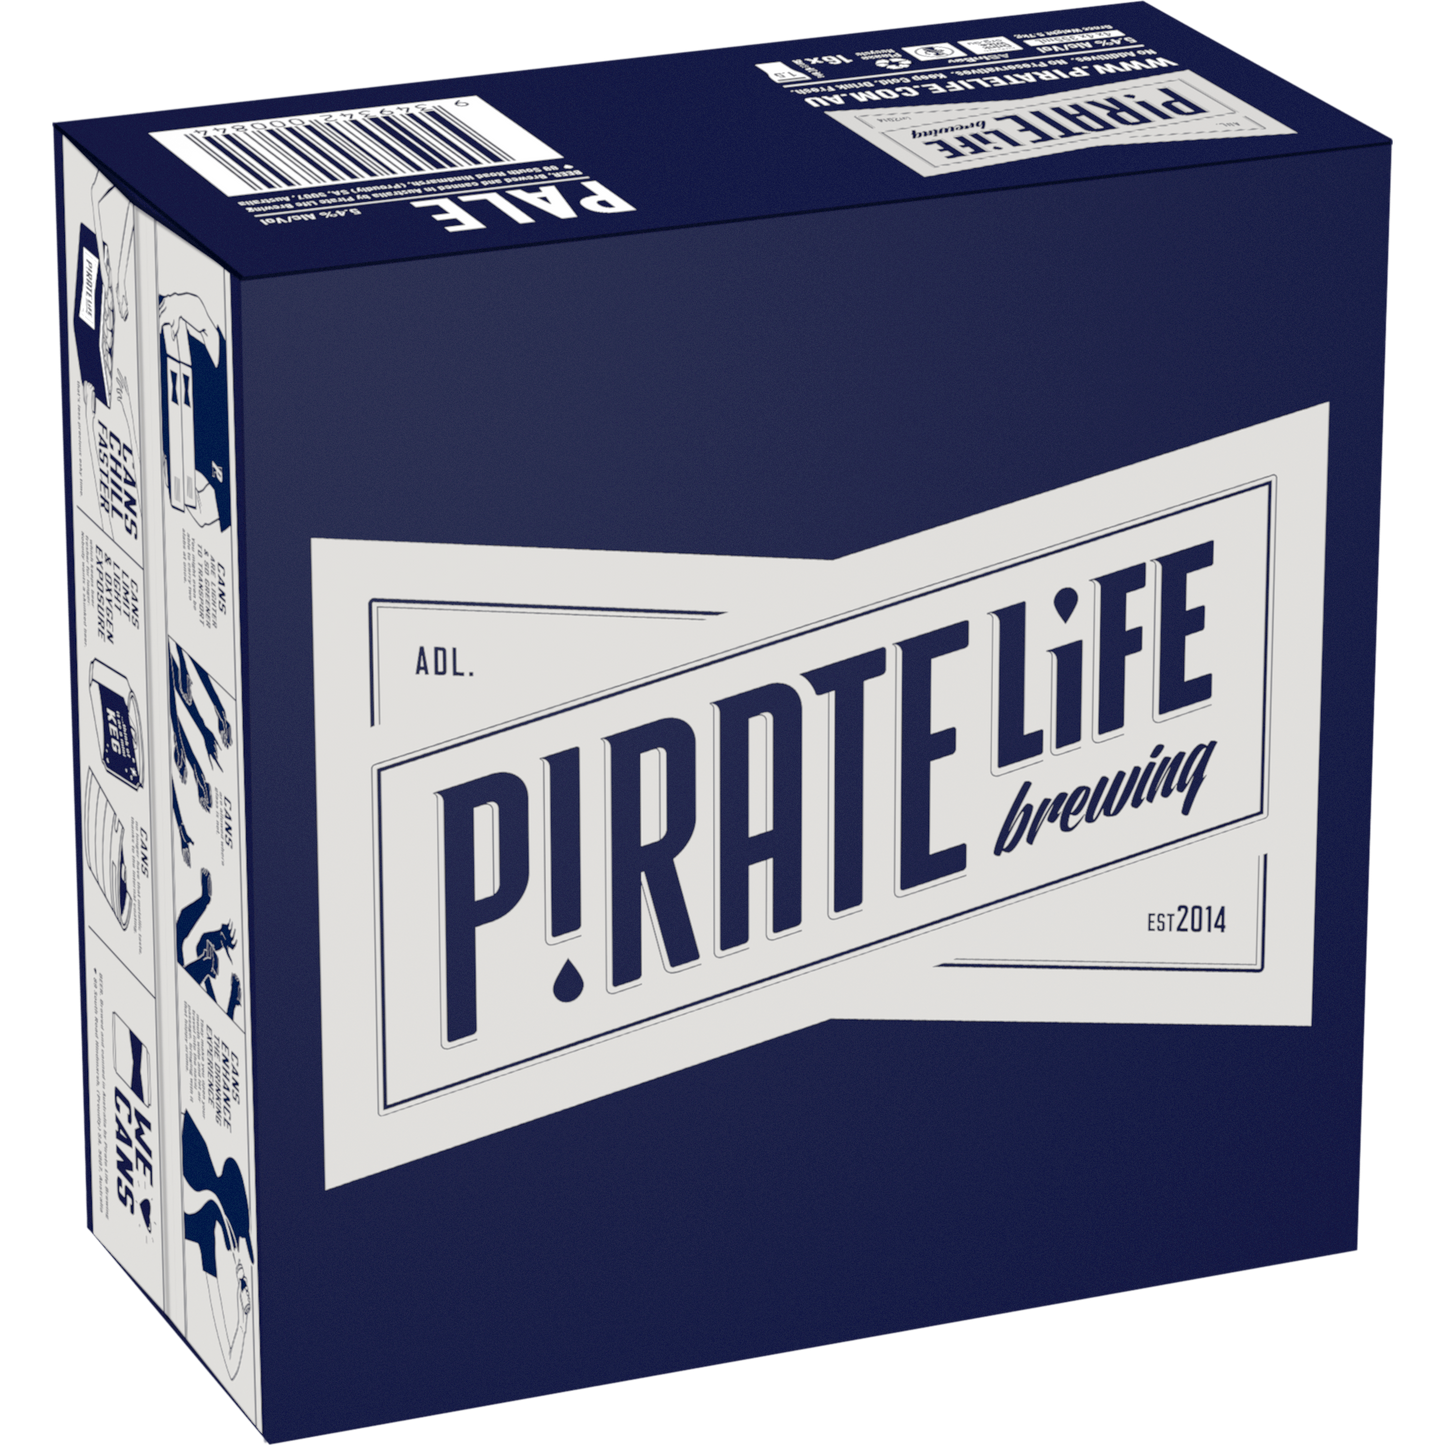 Pirate Life Brewing Pale Ale 355ml